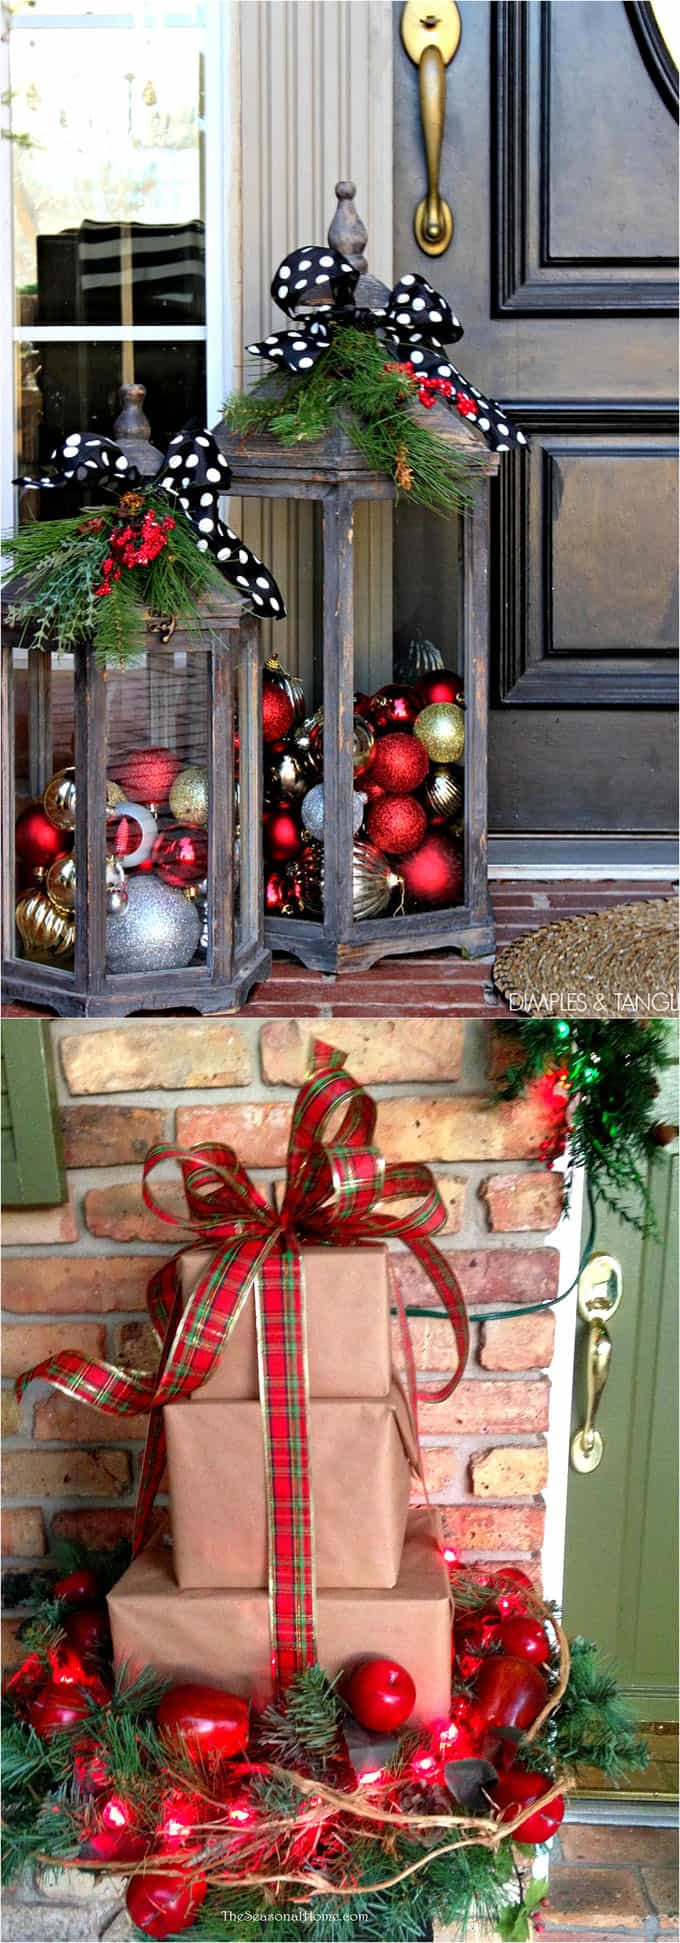 DIY Outdoor Christmas Decorating Ideas
 Gorgeous Outdoor Christmas Decorations 32 Best Ideas